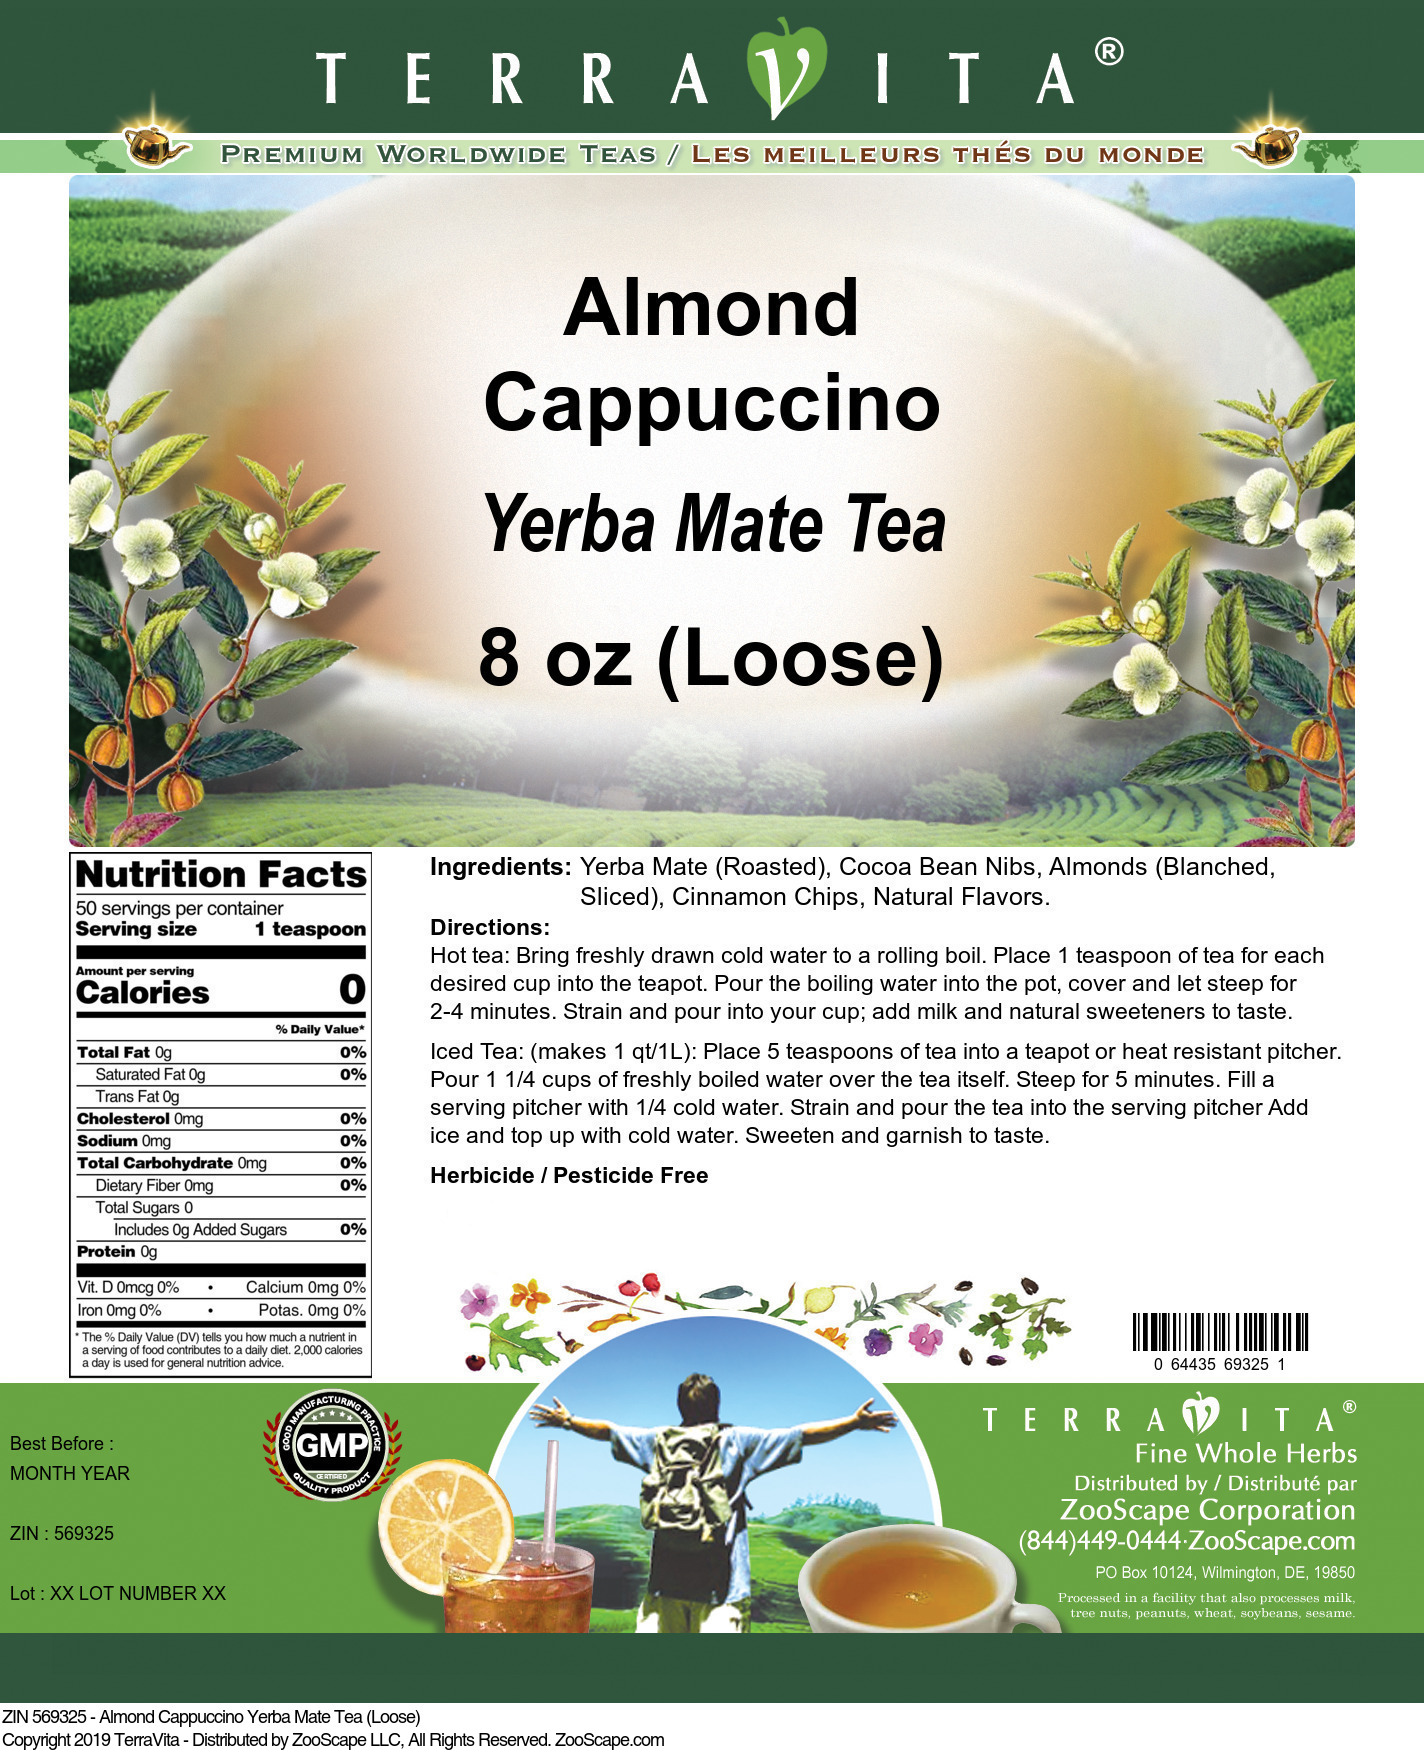 Almond Cappuccino Yerba Mate Tea (Loose) - Label